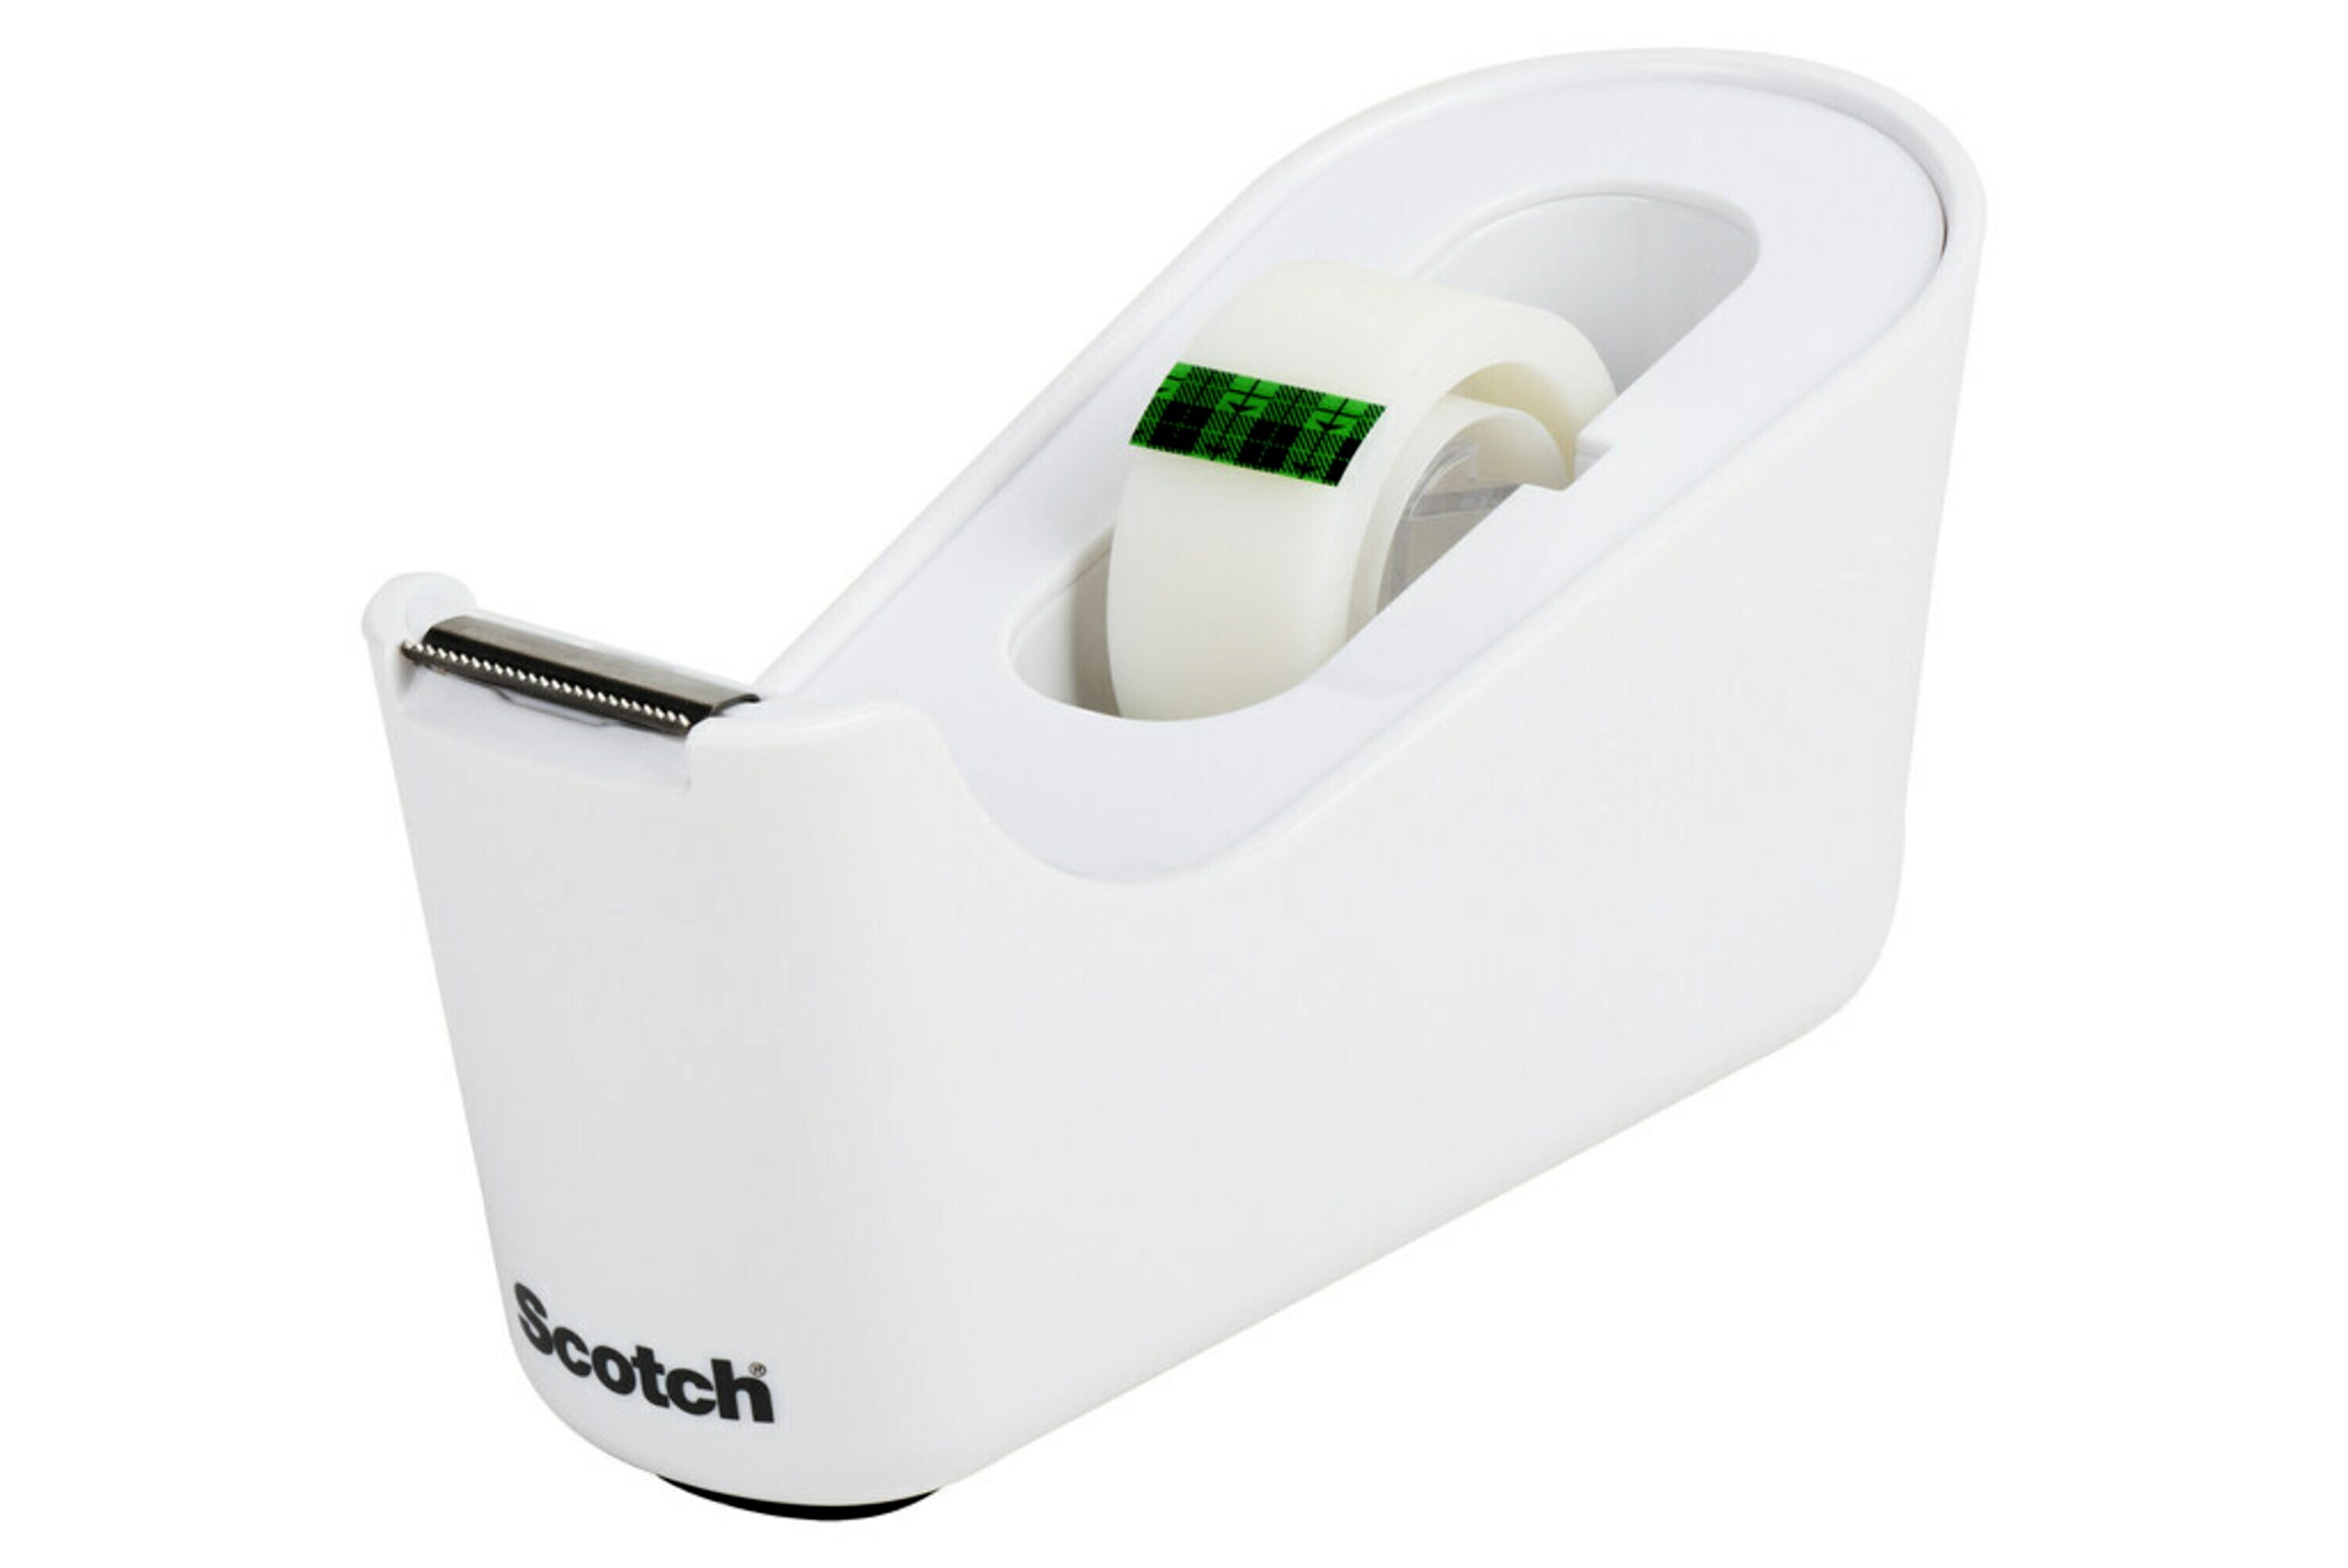 Scotch Desktop Tape Dispenser, White, 3/4 in. x 350 in., 1 Tape Dispenser  and 1 Roll/Pack